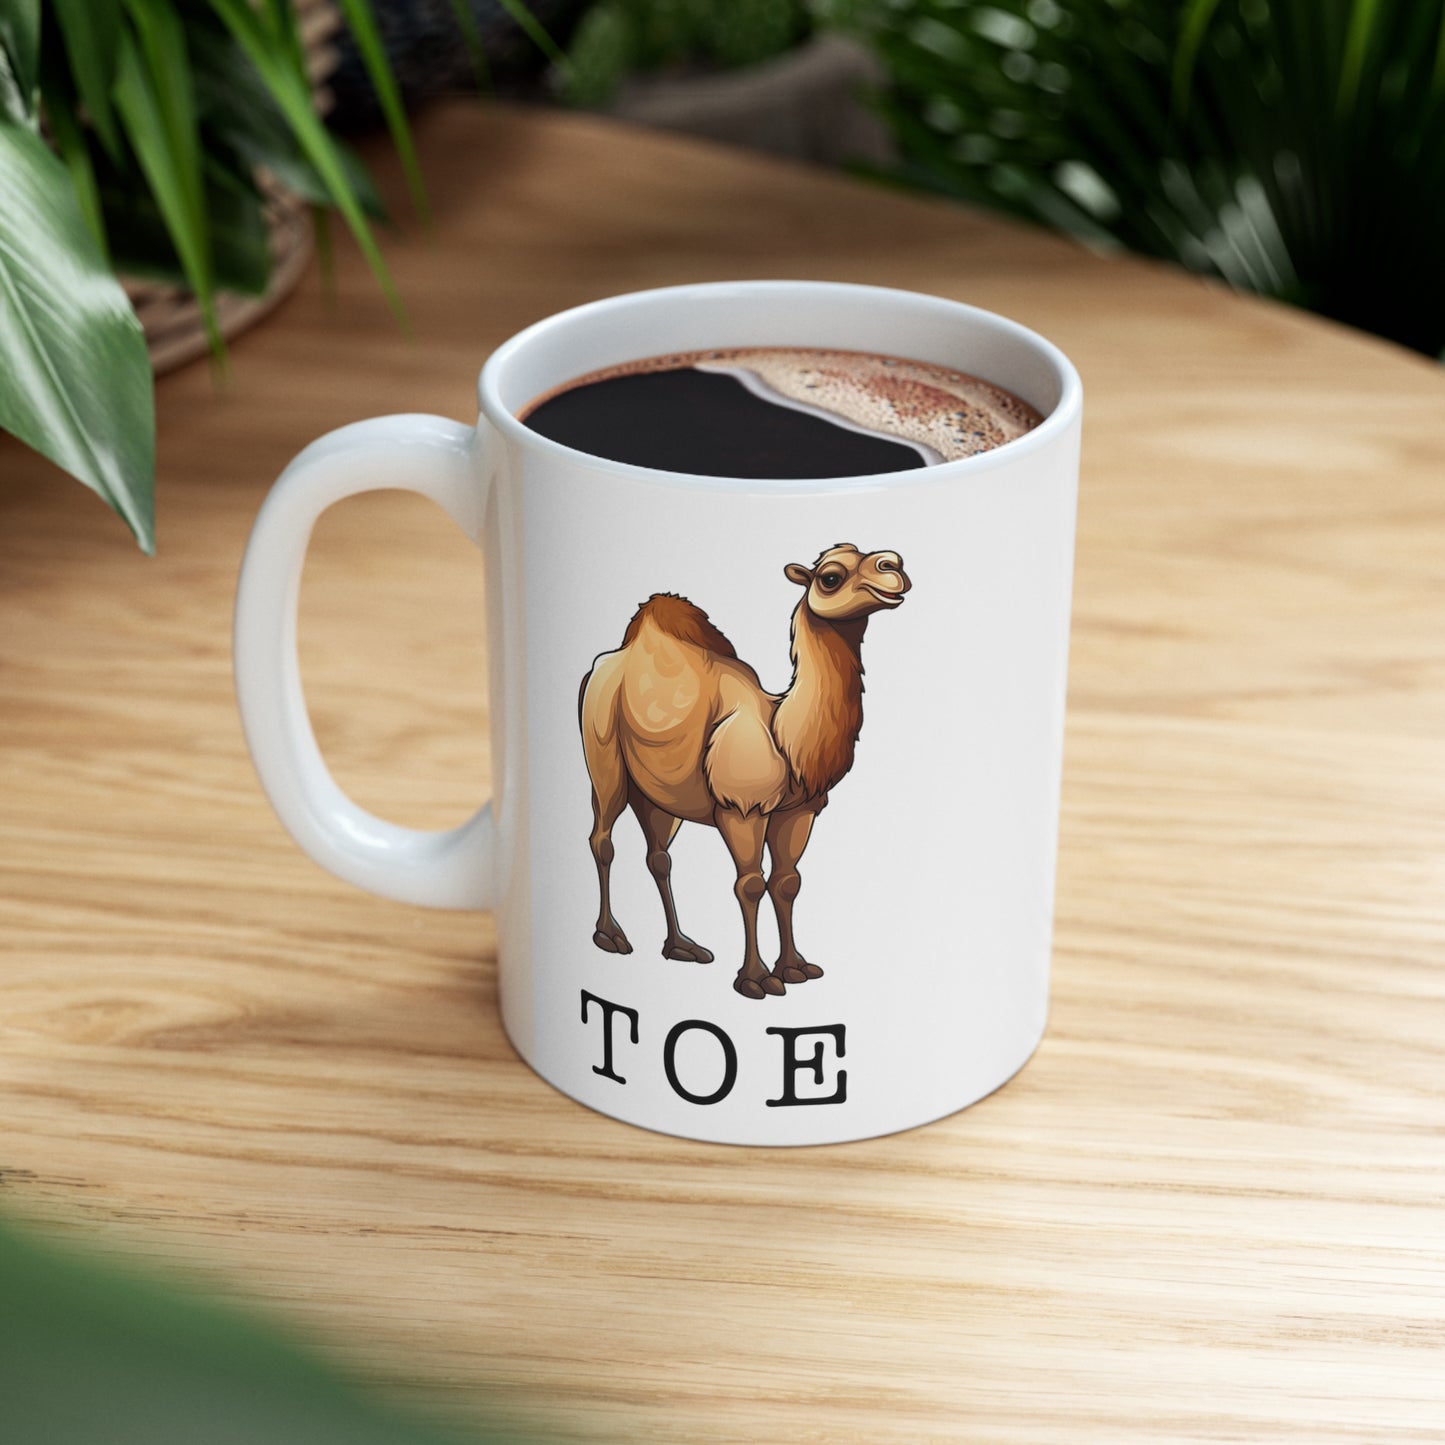 Camel Toe - The novelty/gift coffee mug!